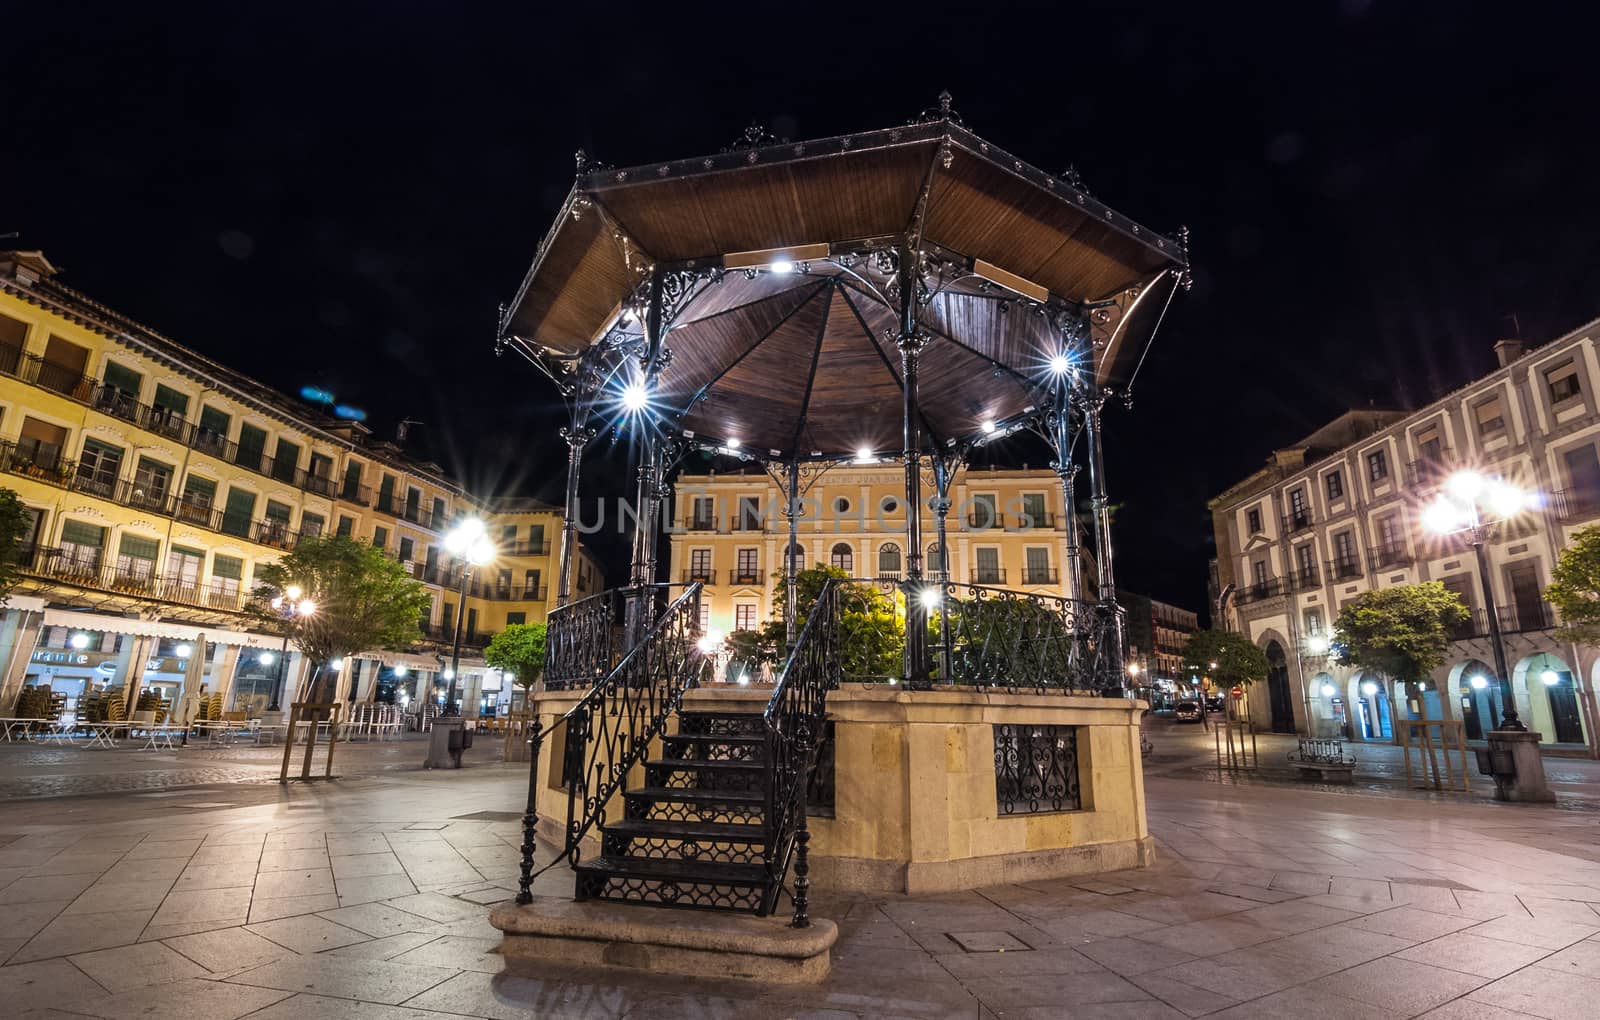 Segovia Market square at night by valleyboi63